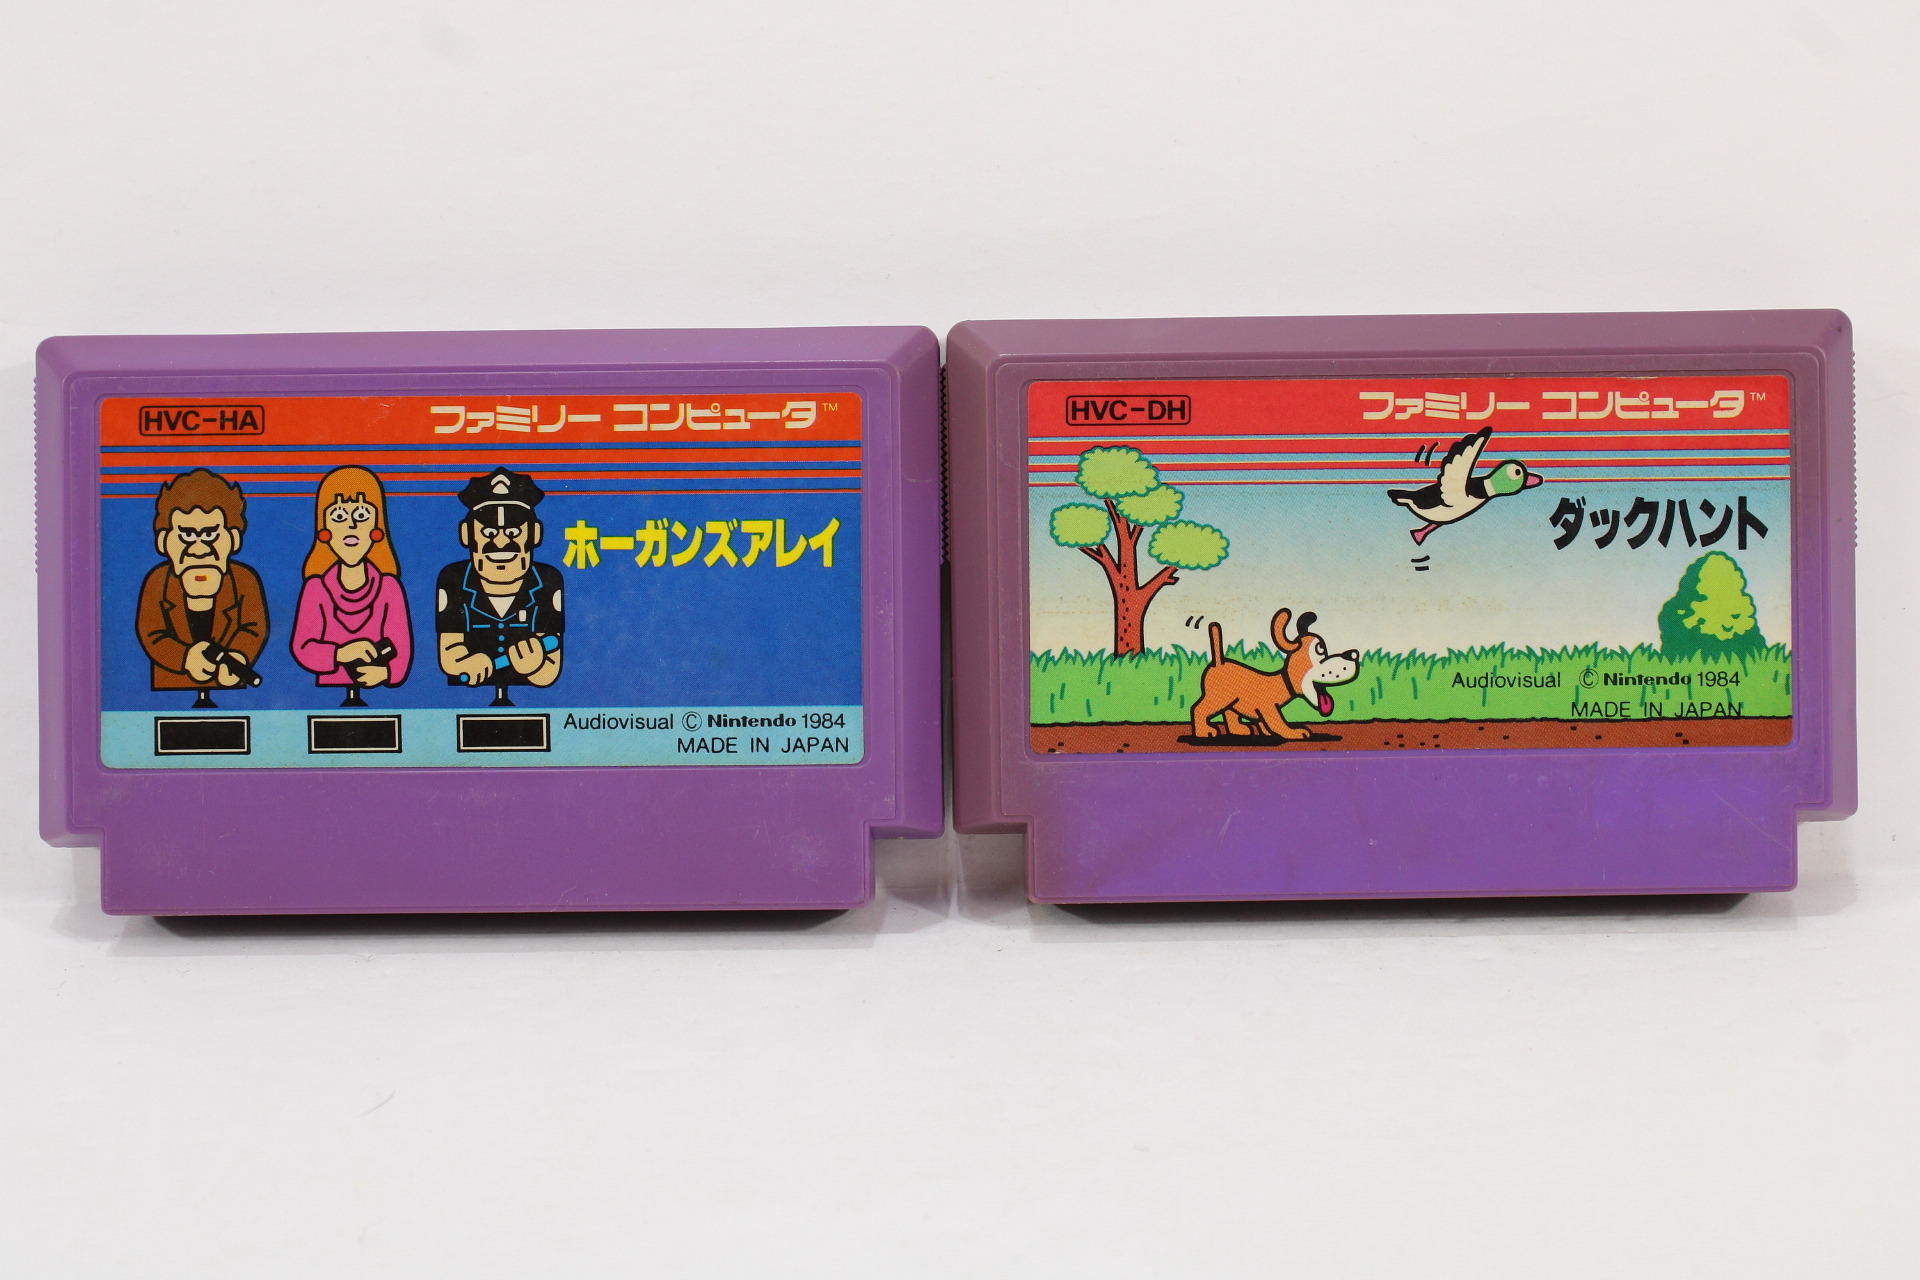 Free 80s Arcade: Play Duck Hunt Online - Online browser play of classic  Nintendo NES, retro Atari games and original Sega Arcade games - Free play